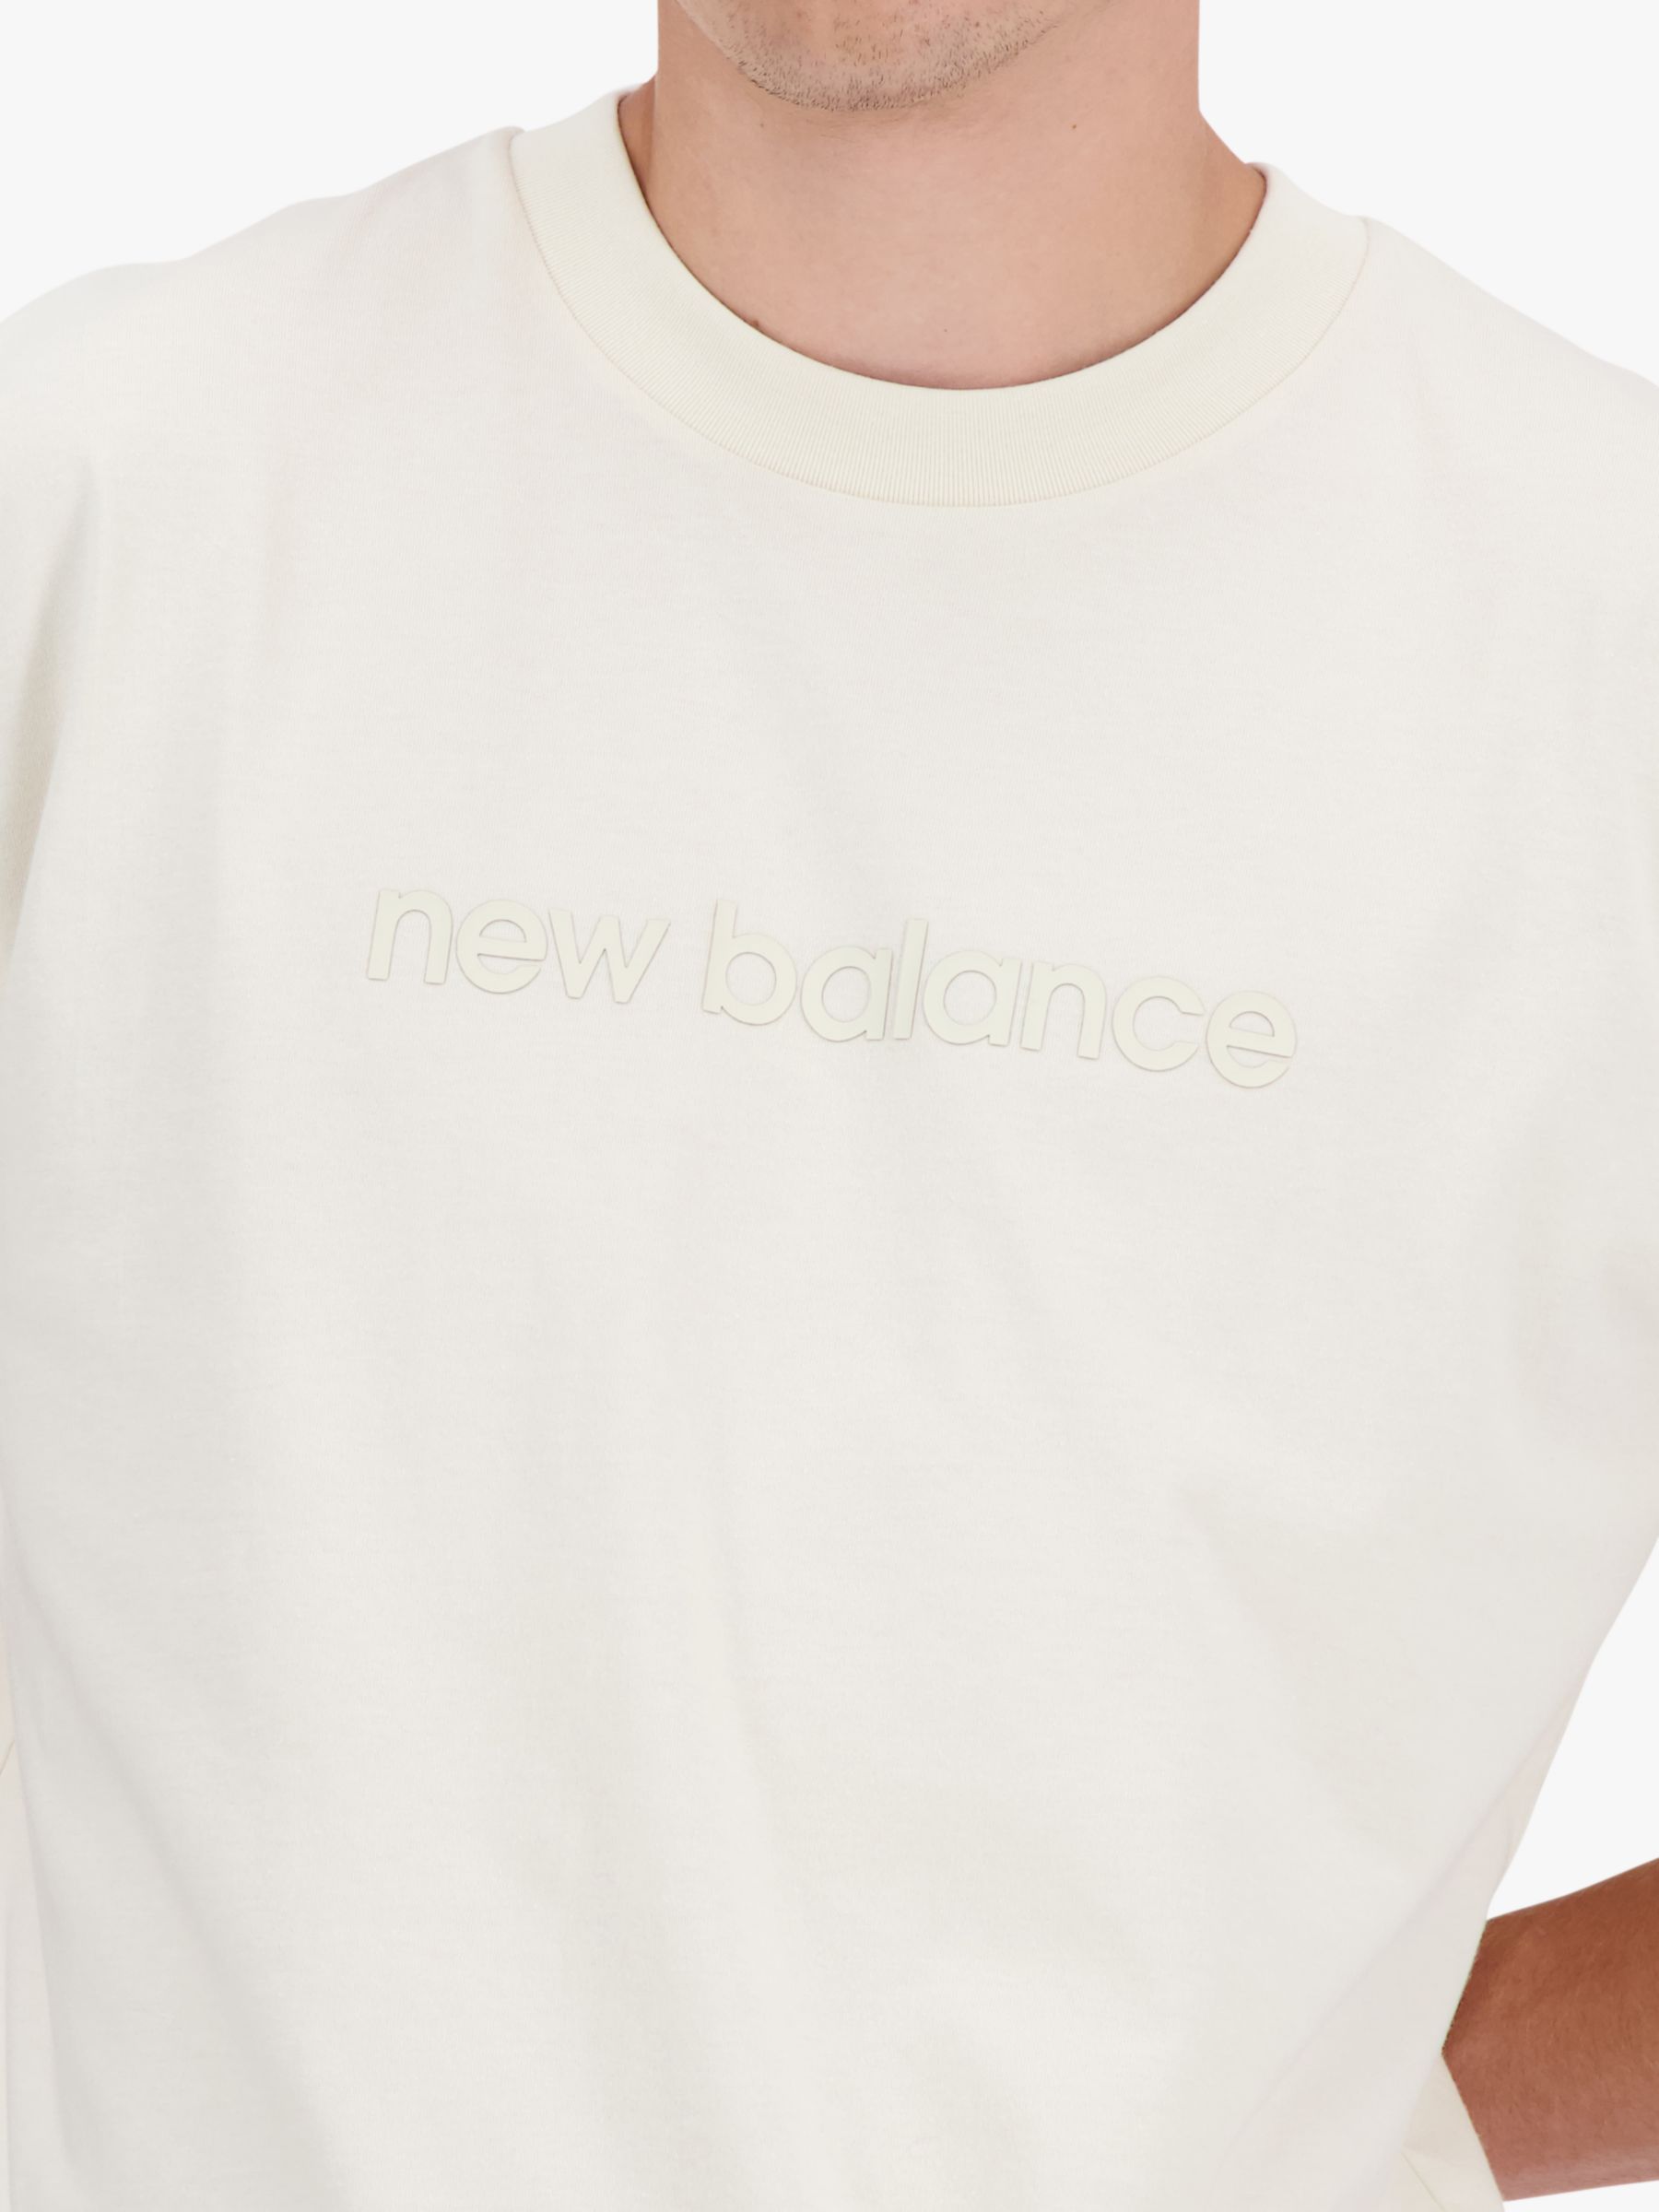 New Balance Shifted Printed T-Shirt, Cream, S